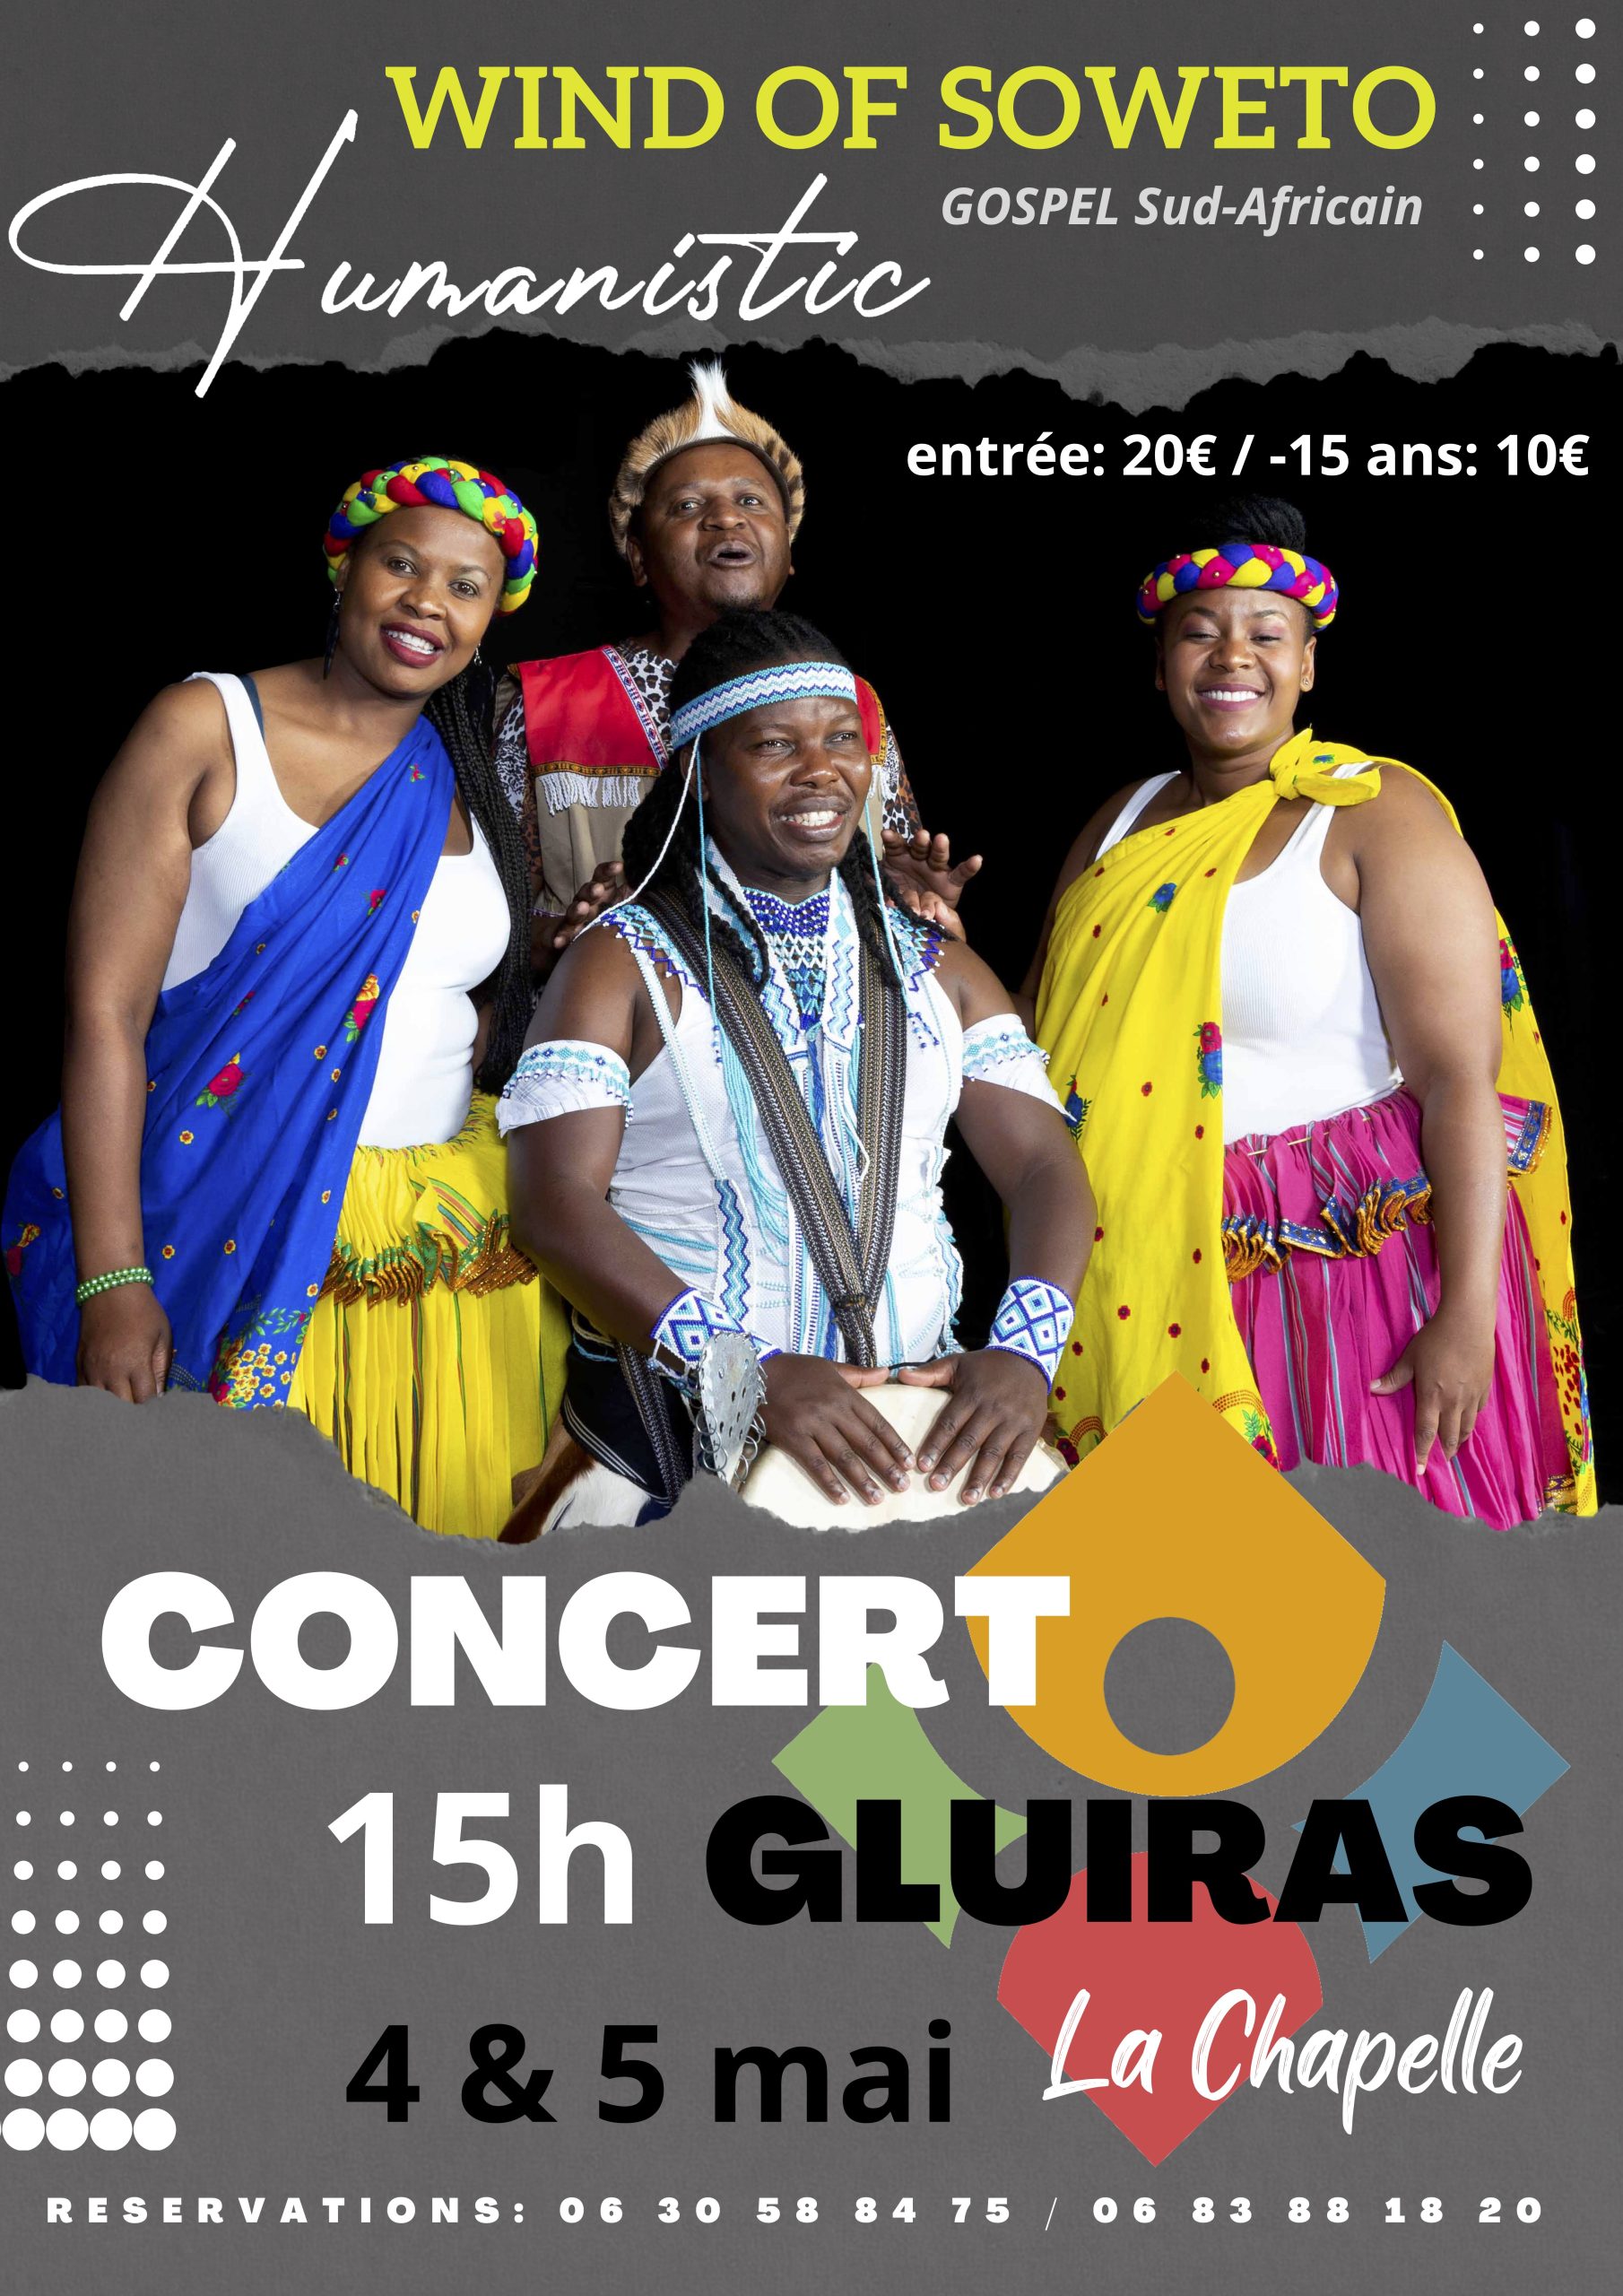 Alle leuke evenementen! : Concerts du groupe de Gospel : Humanistic Wind of Soweto